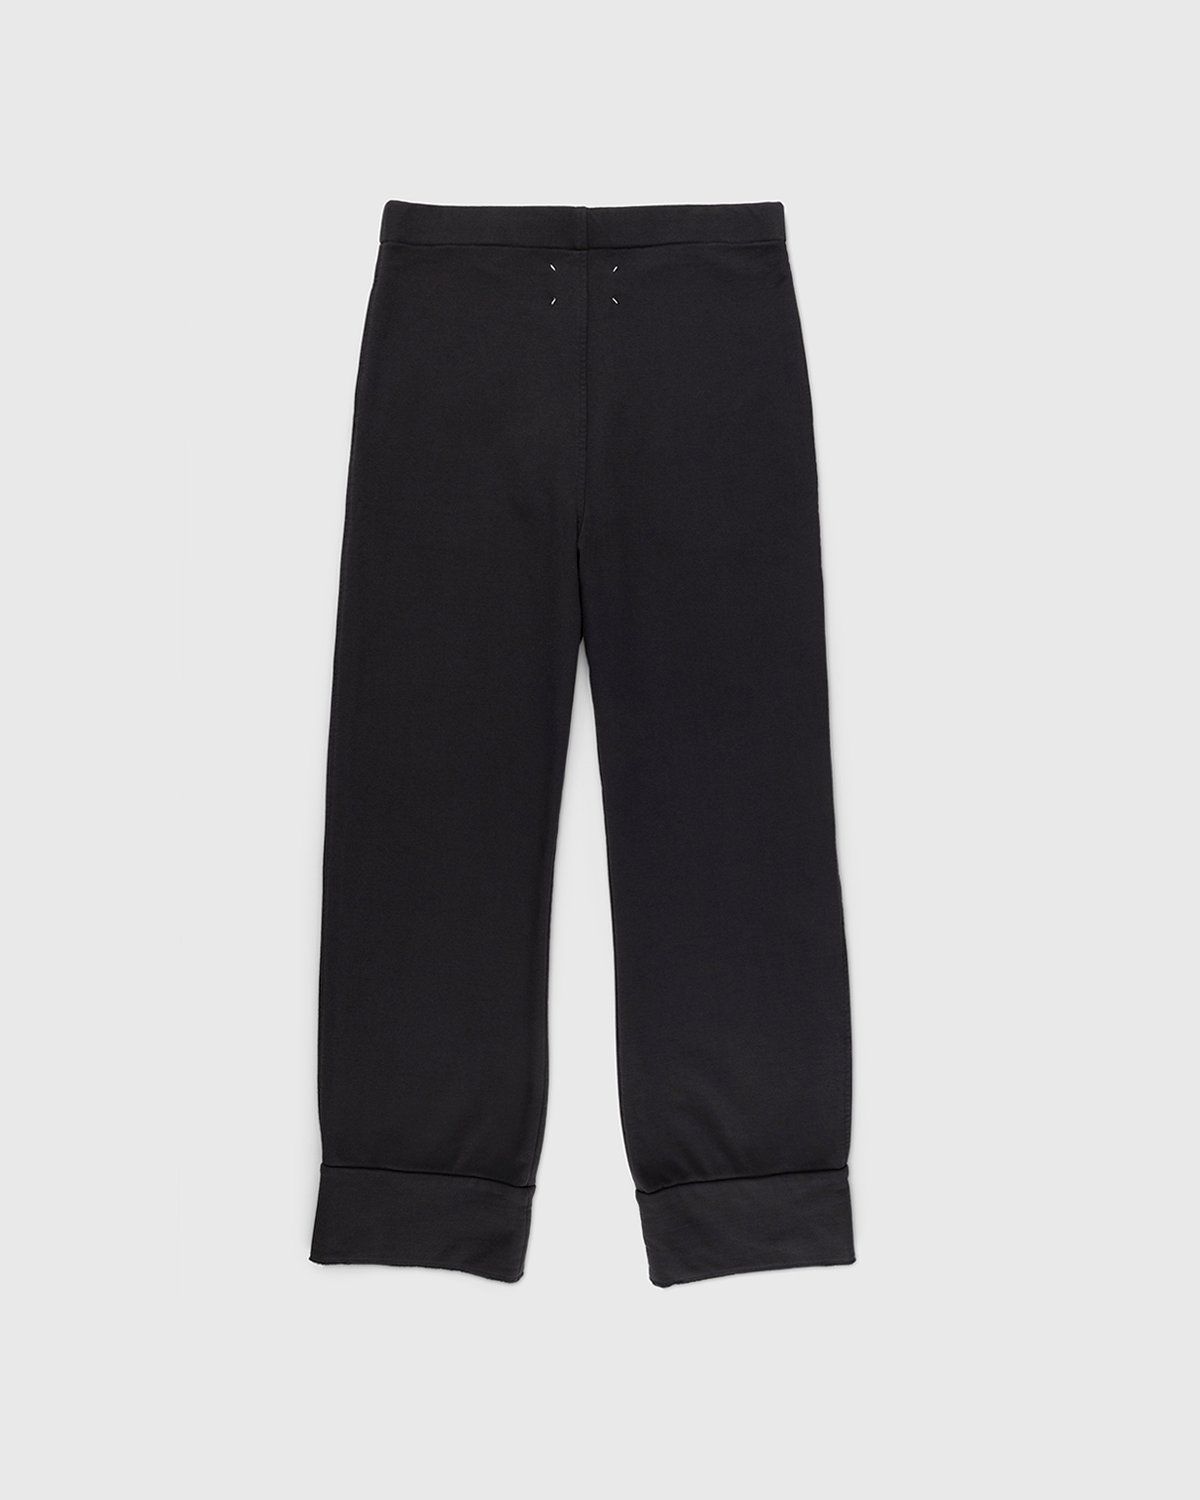 Maison Margiela – Tailored Cotton Trousers Washed Black | Highsnobiety Shop